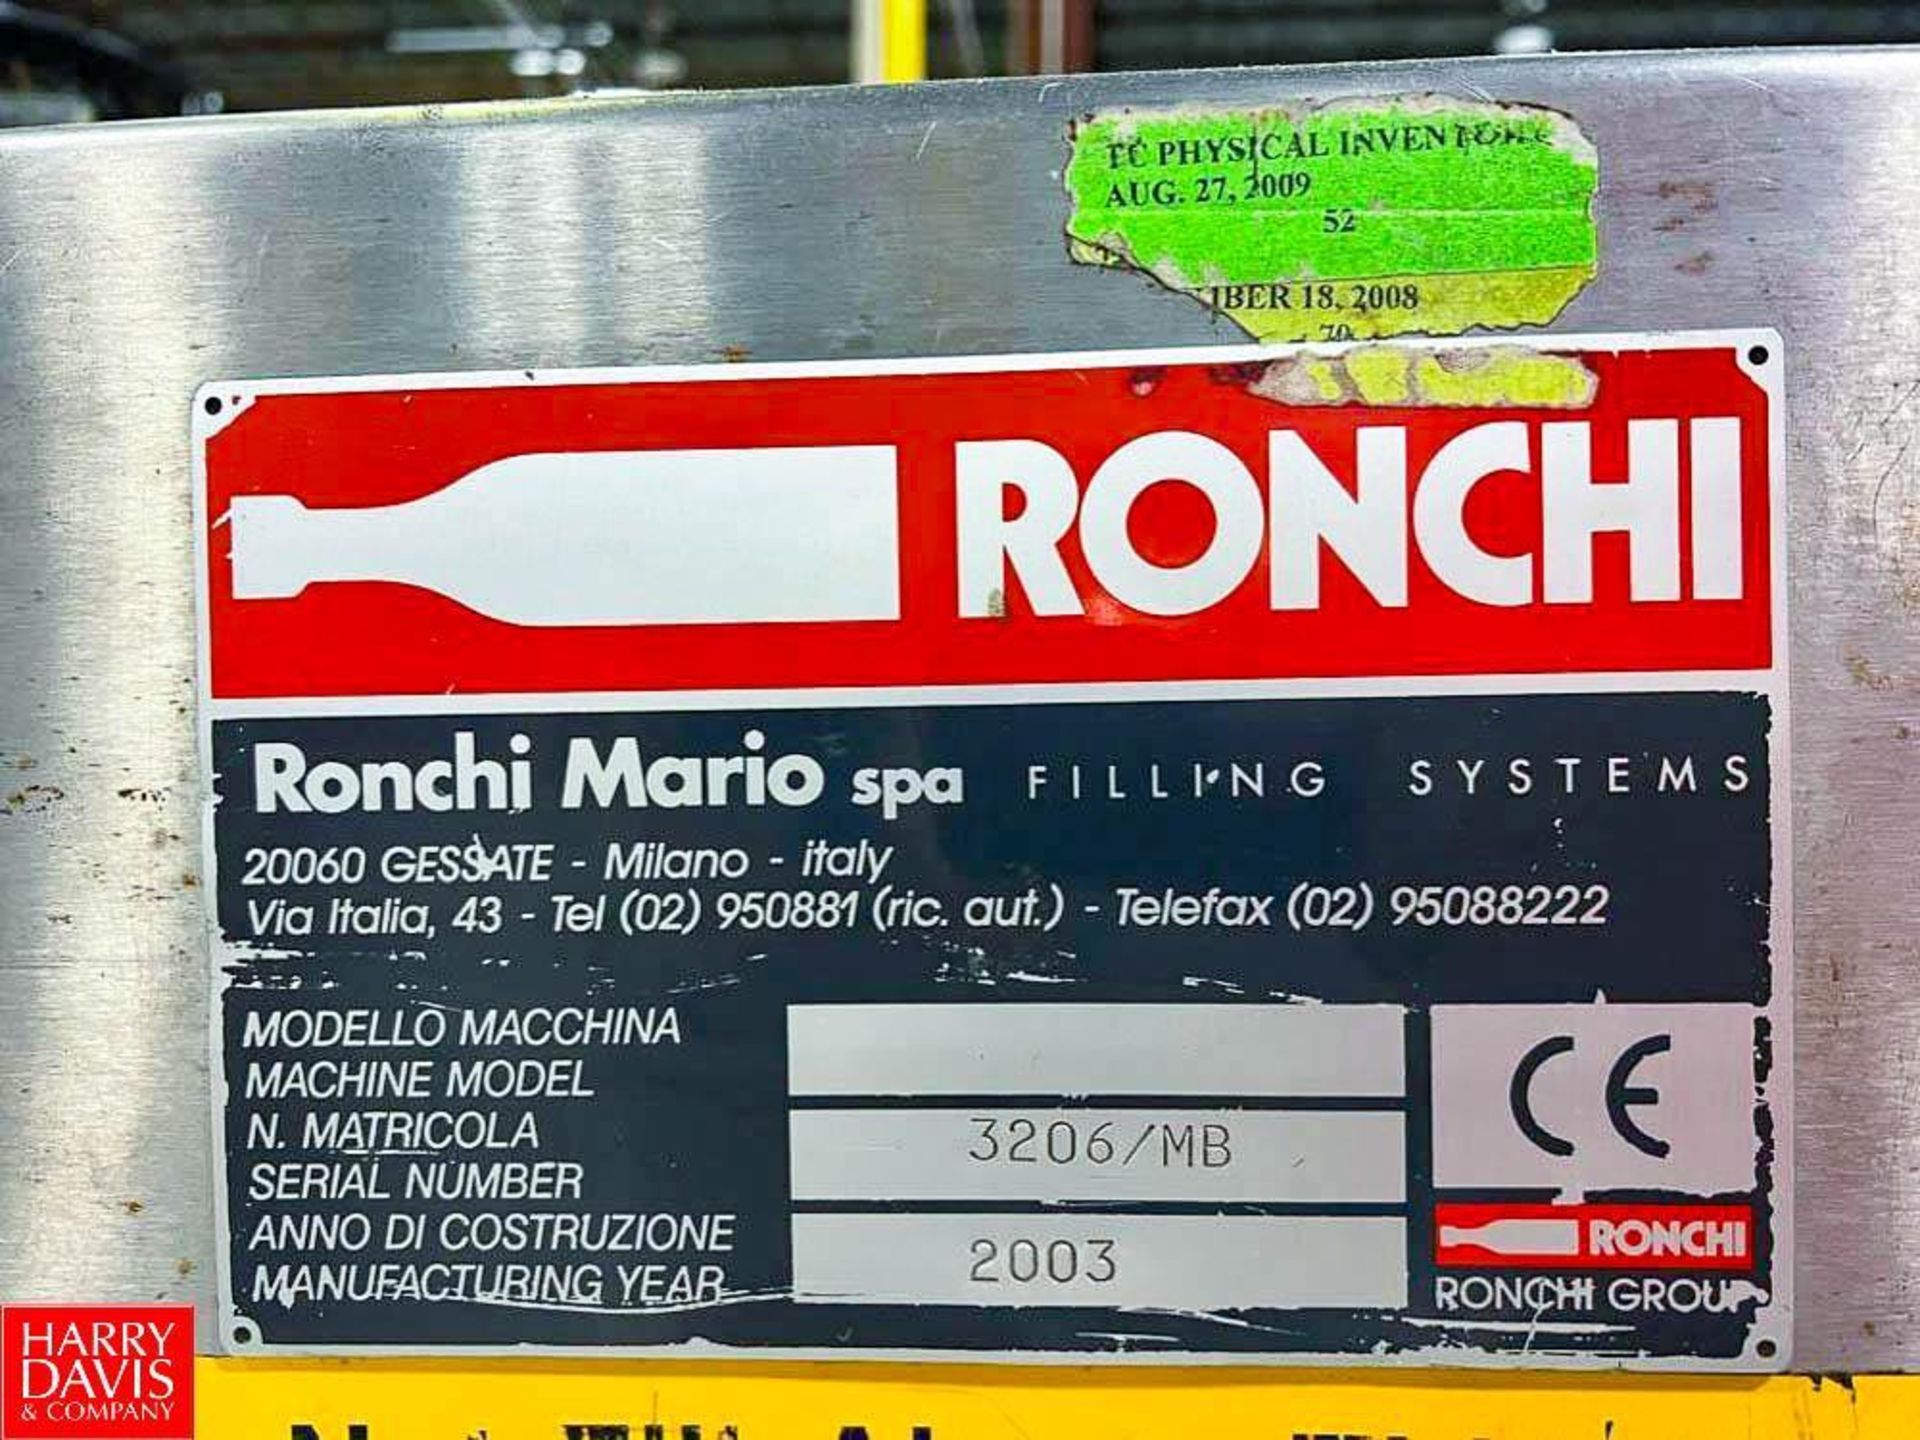 Ronchi 40-Valve Filler/16-Valve Capper, Model: Exacta/R/40/16, S/N: 3206/MB with T Group Cap Feeder, - Image 6 of 7